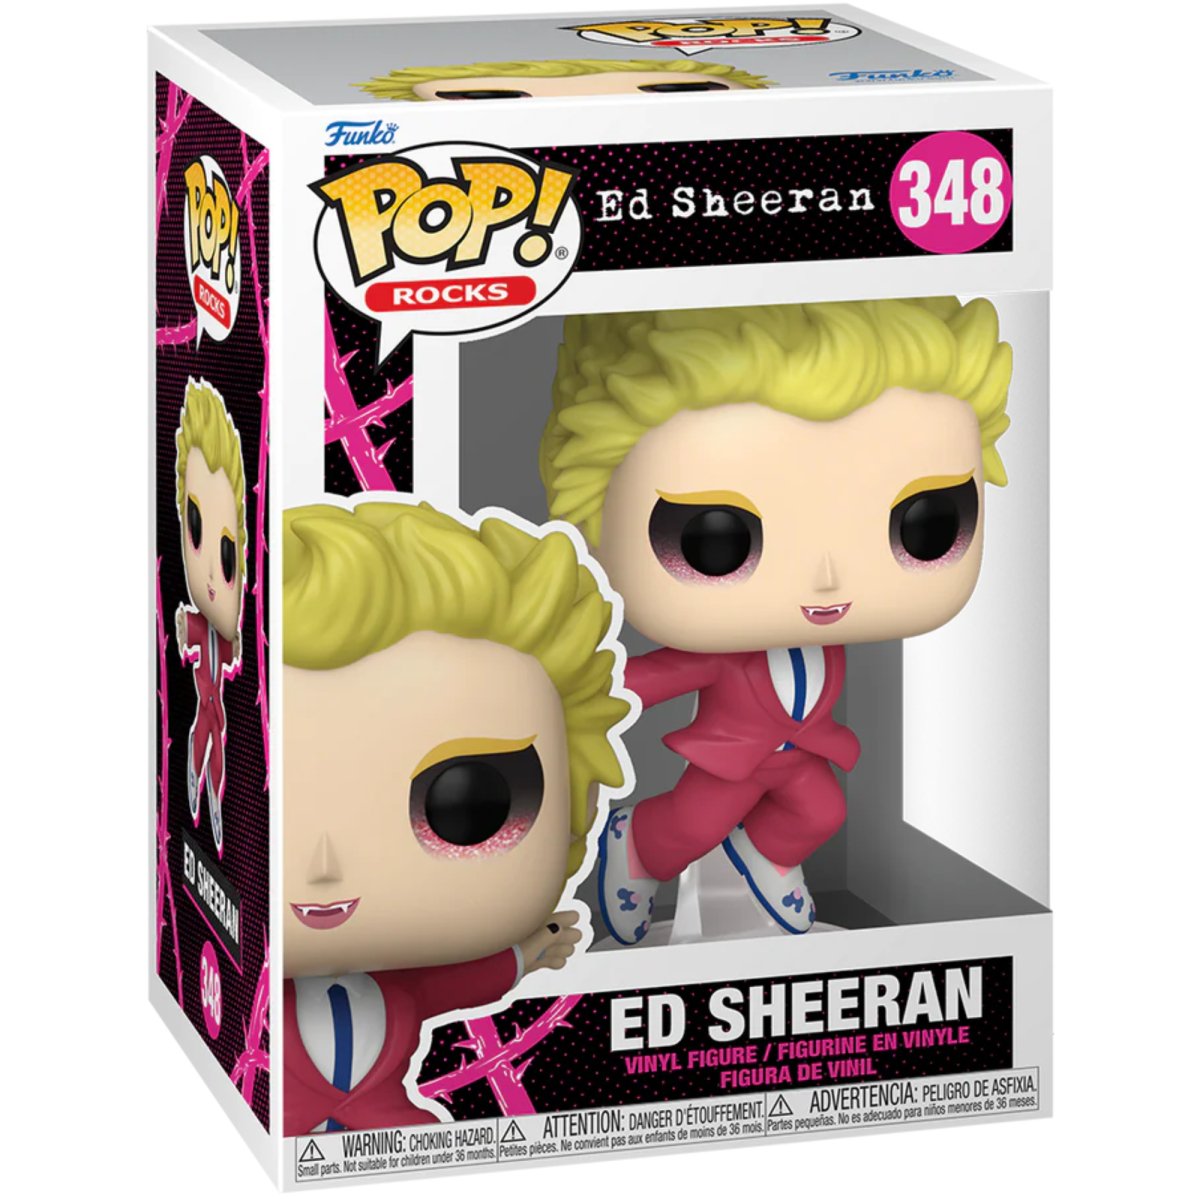 Ed Sheeran - Ed Sheeran [Bad Habits] #348 - Funko Pop! Vinyl Rocks - Persona Toys